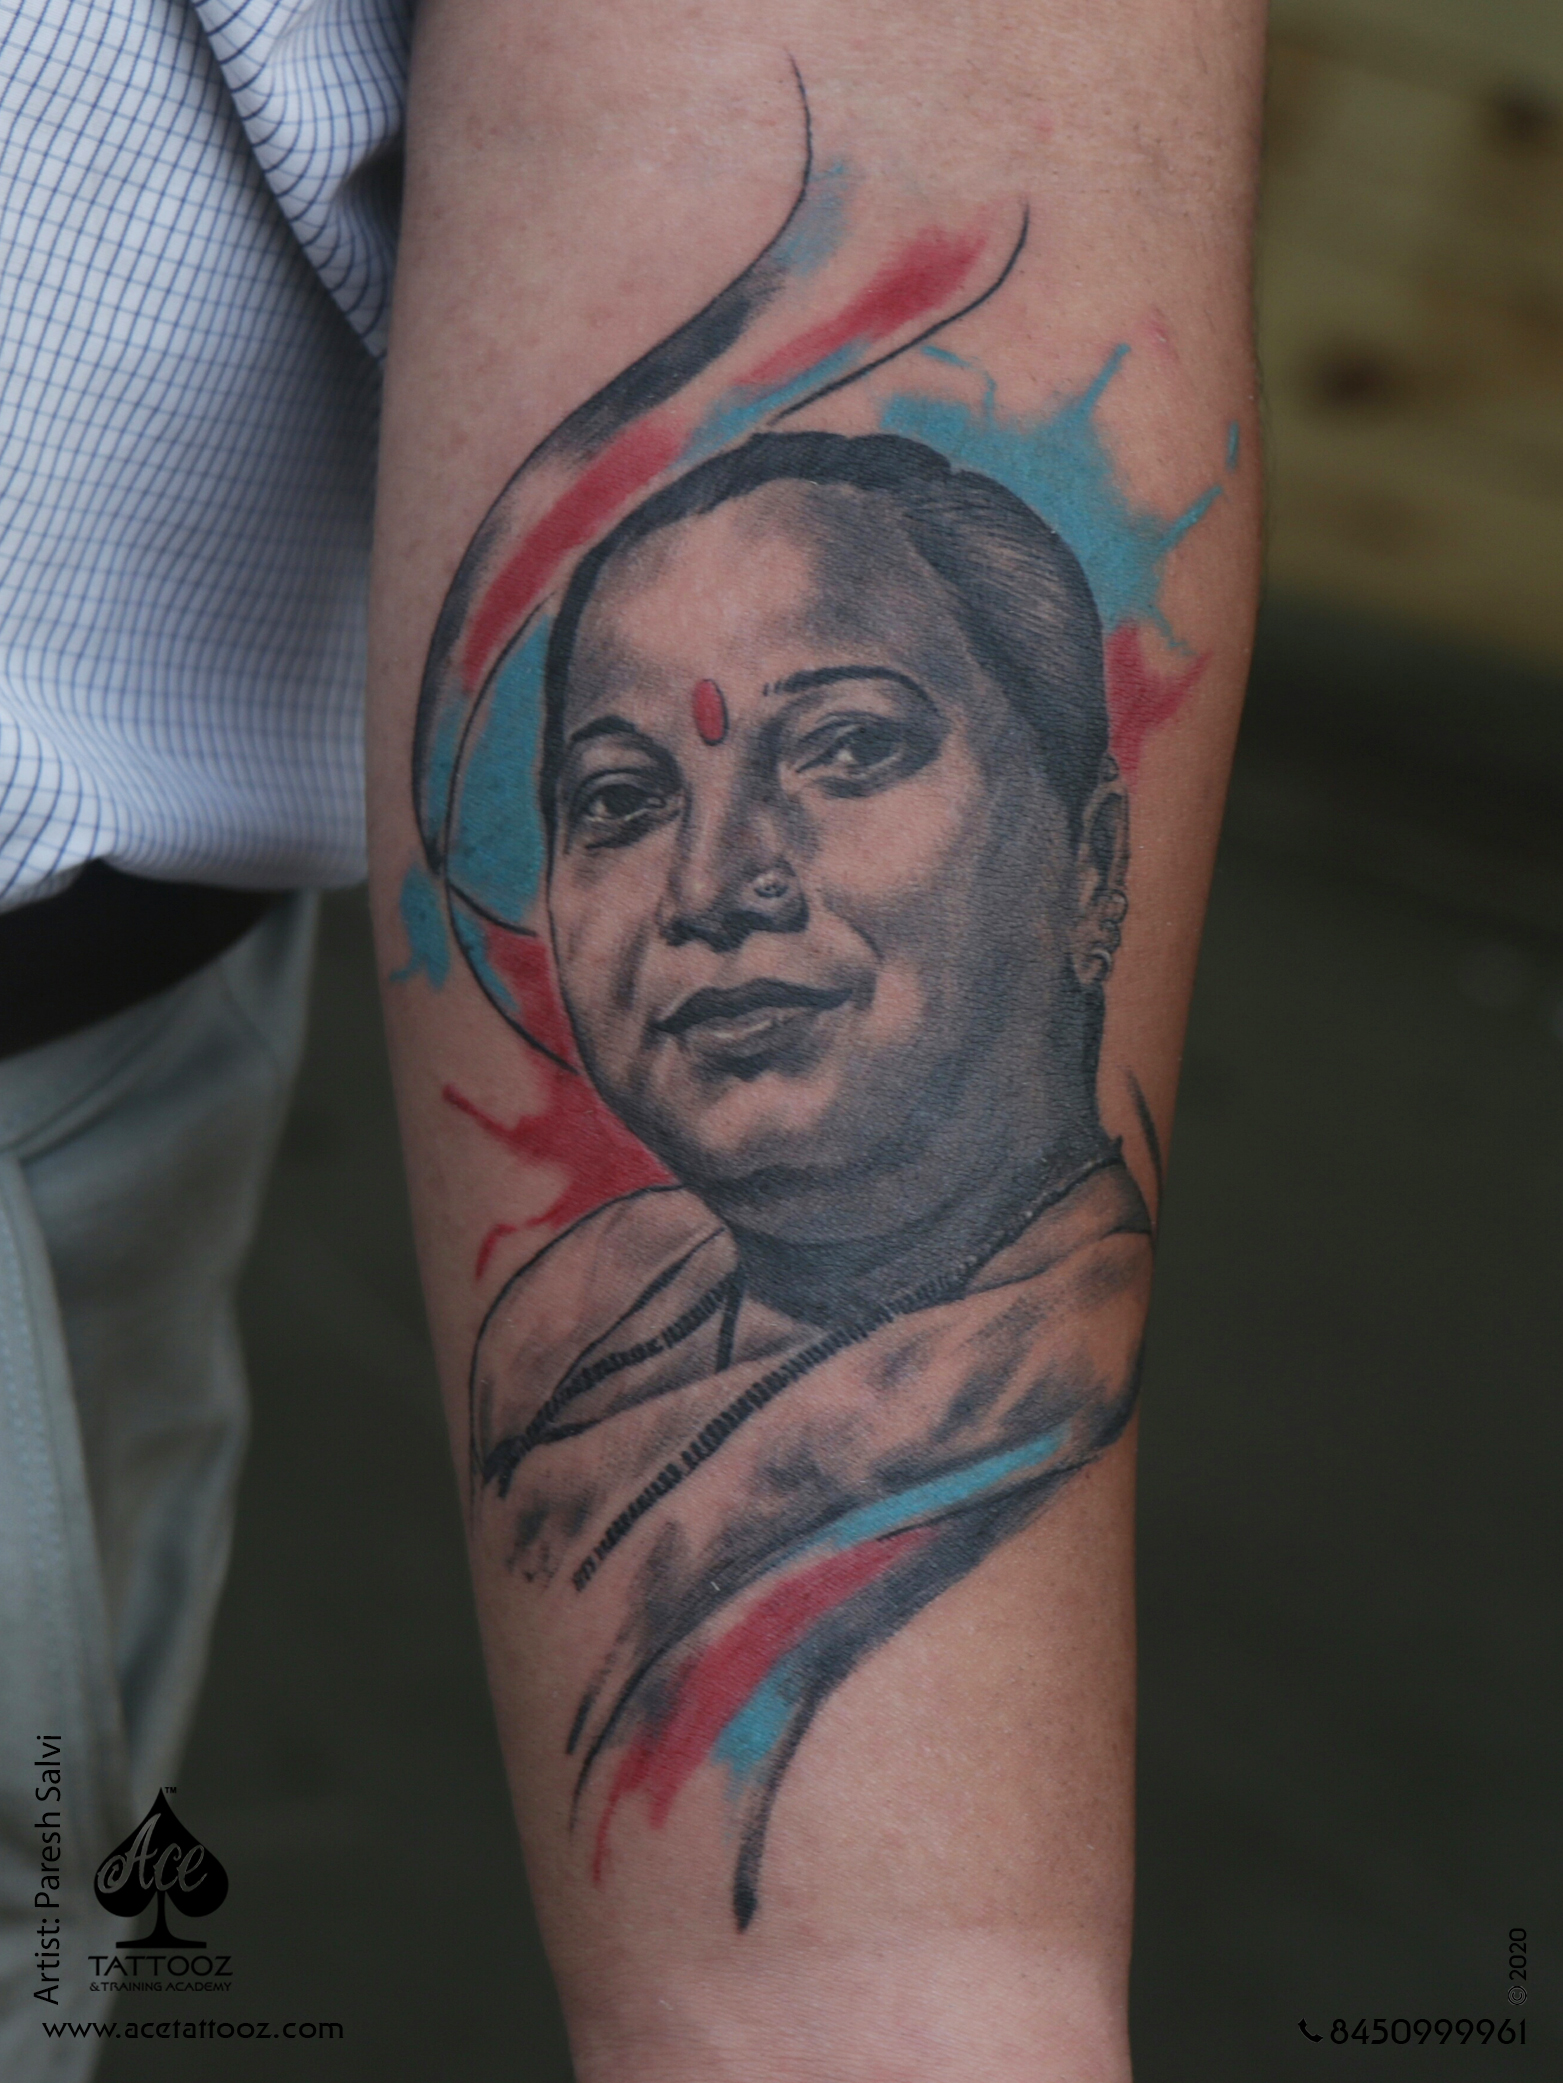 Late Sidhu Moose Walas Father Gets Sons Face Tattooed On Arm  odishabytes